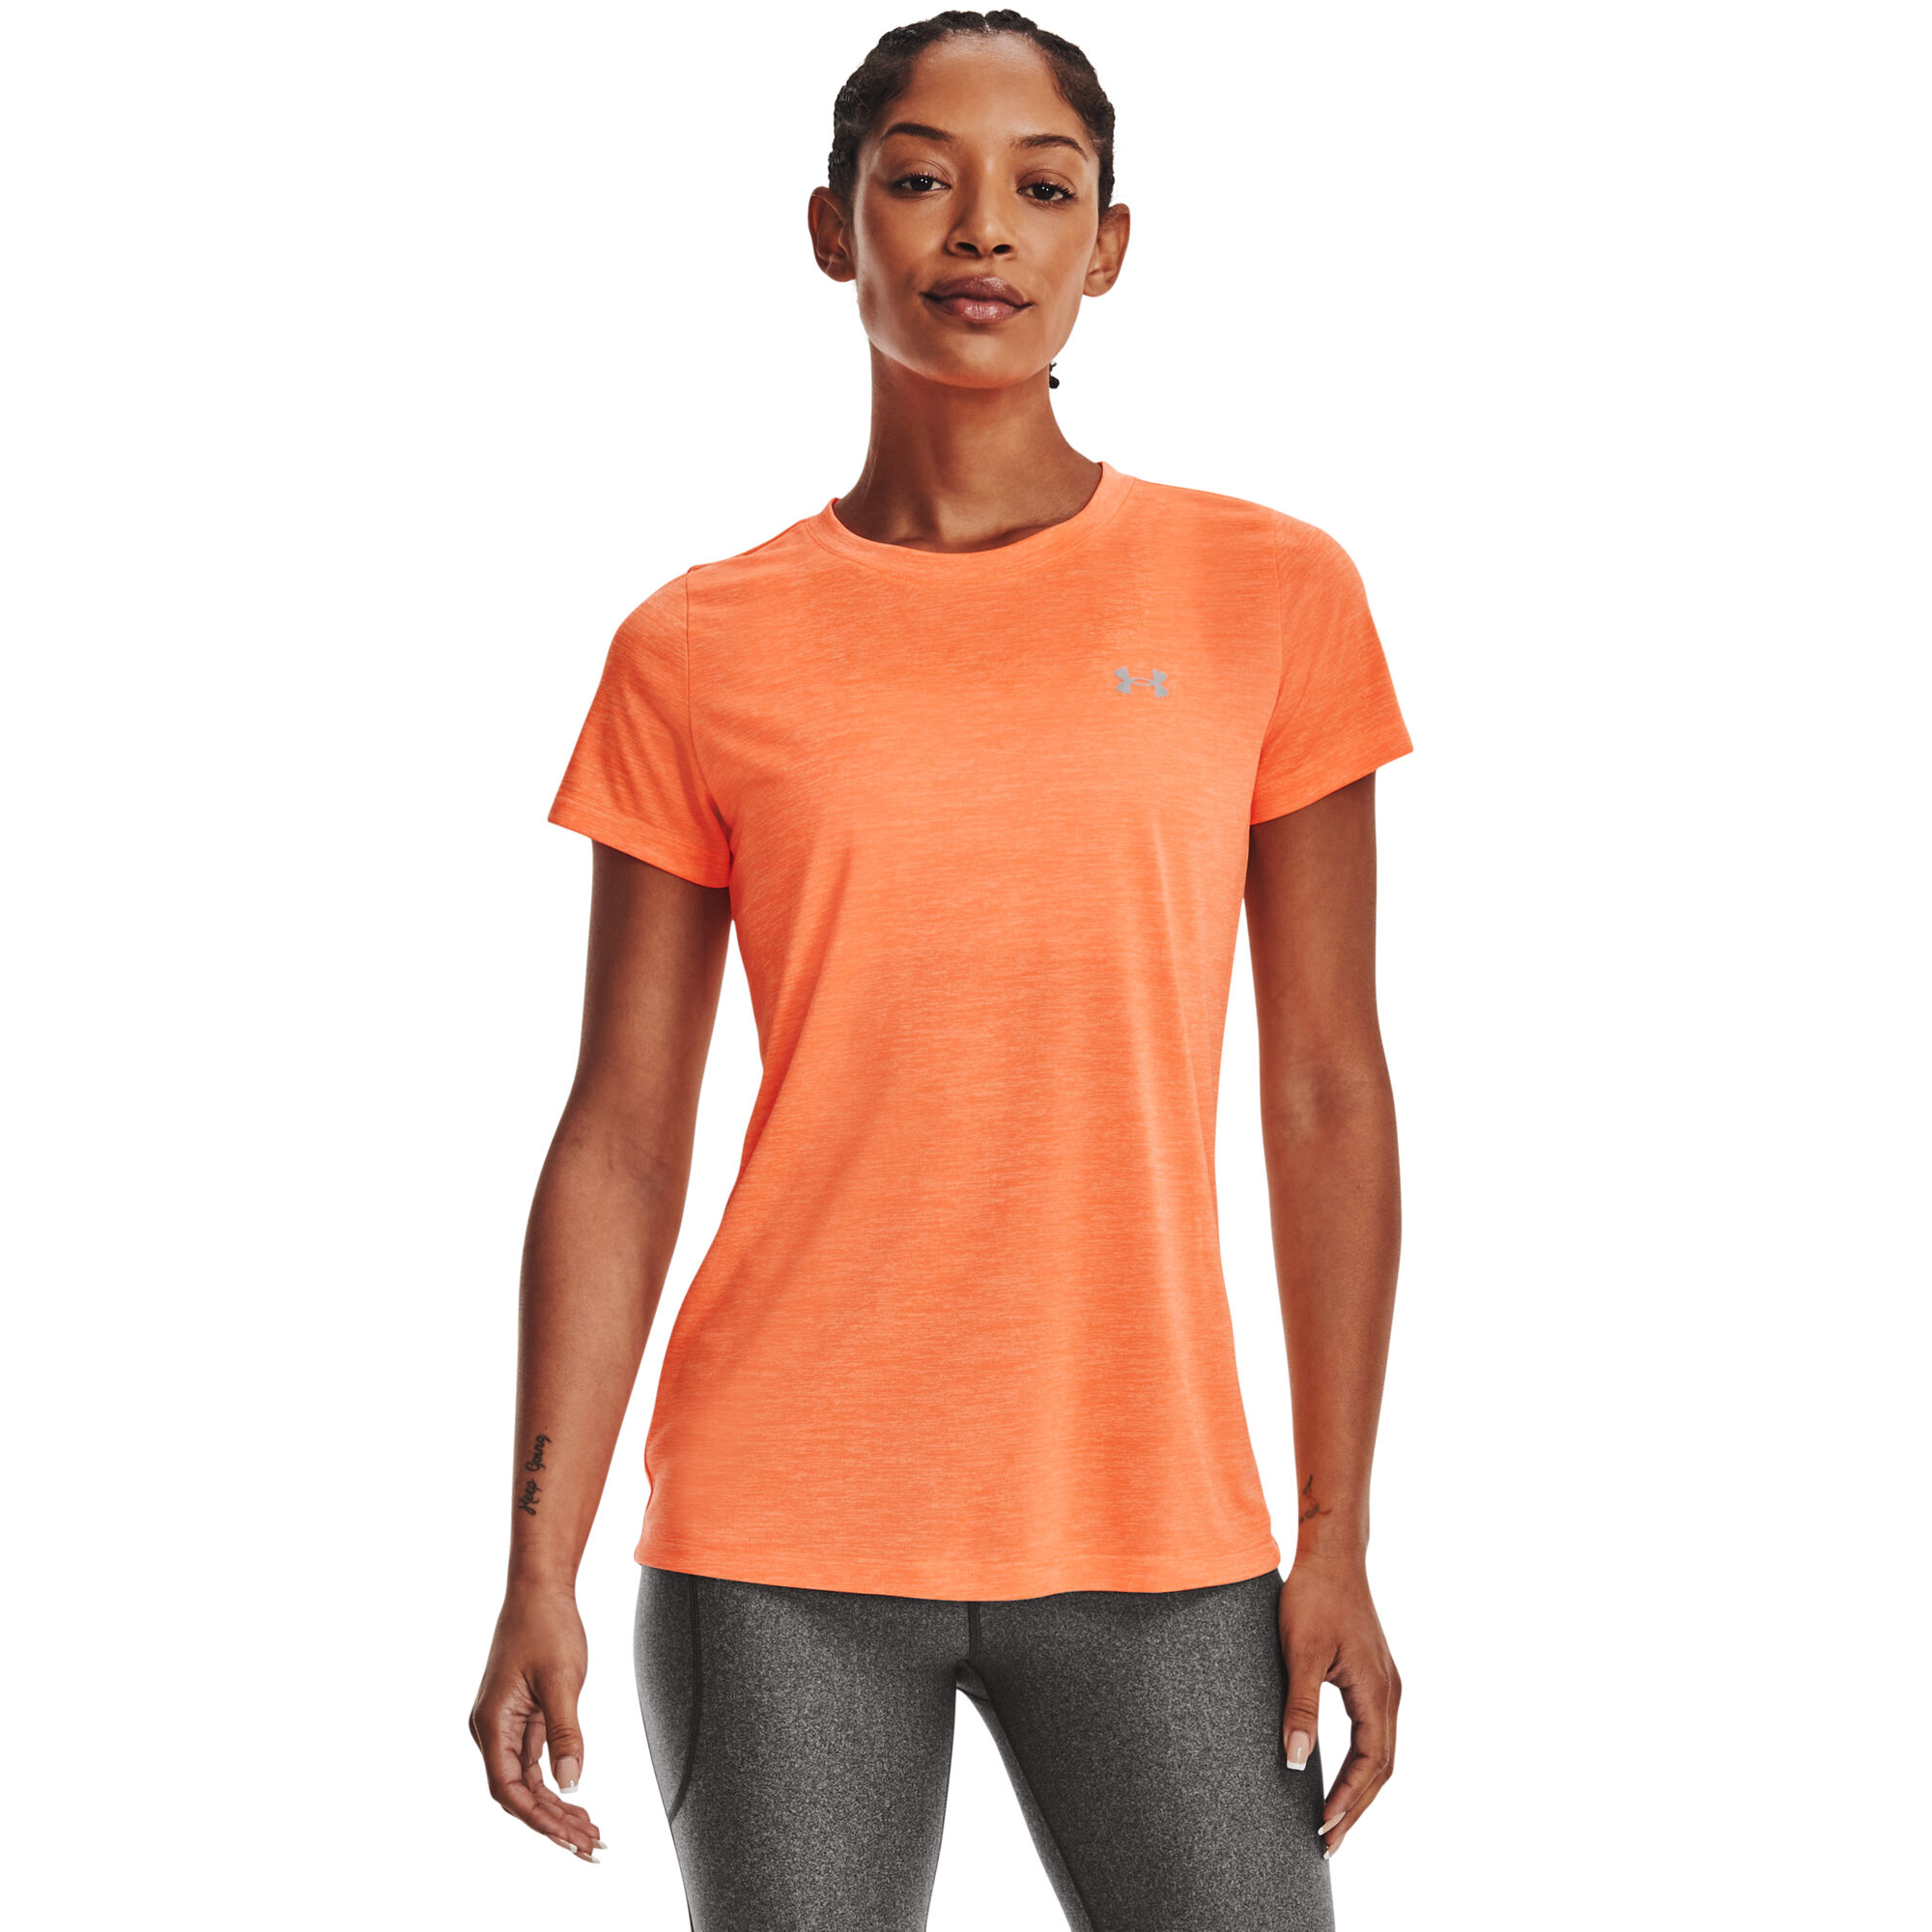 exegese Diversen Evaluatie buy Under Armour Tech Twist T-Shirt Women - Orange online | Tennis-Point